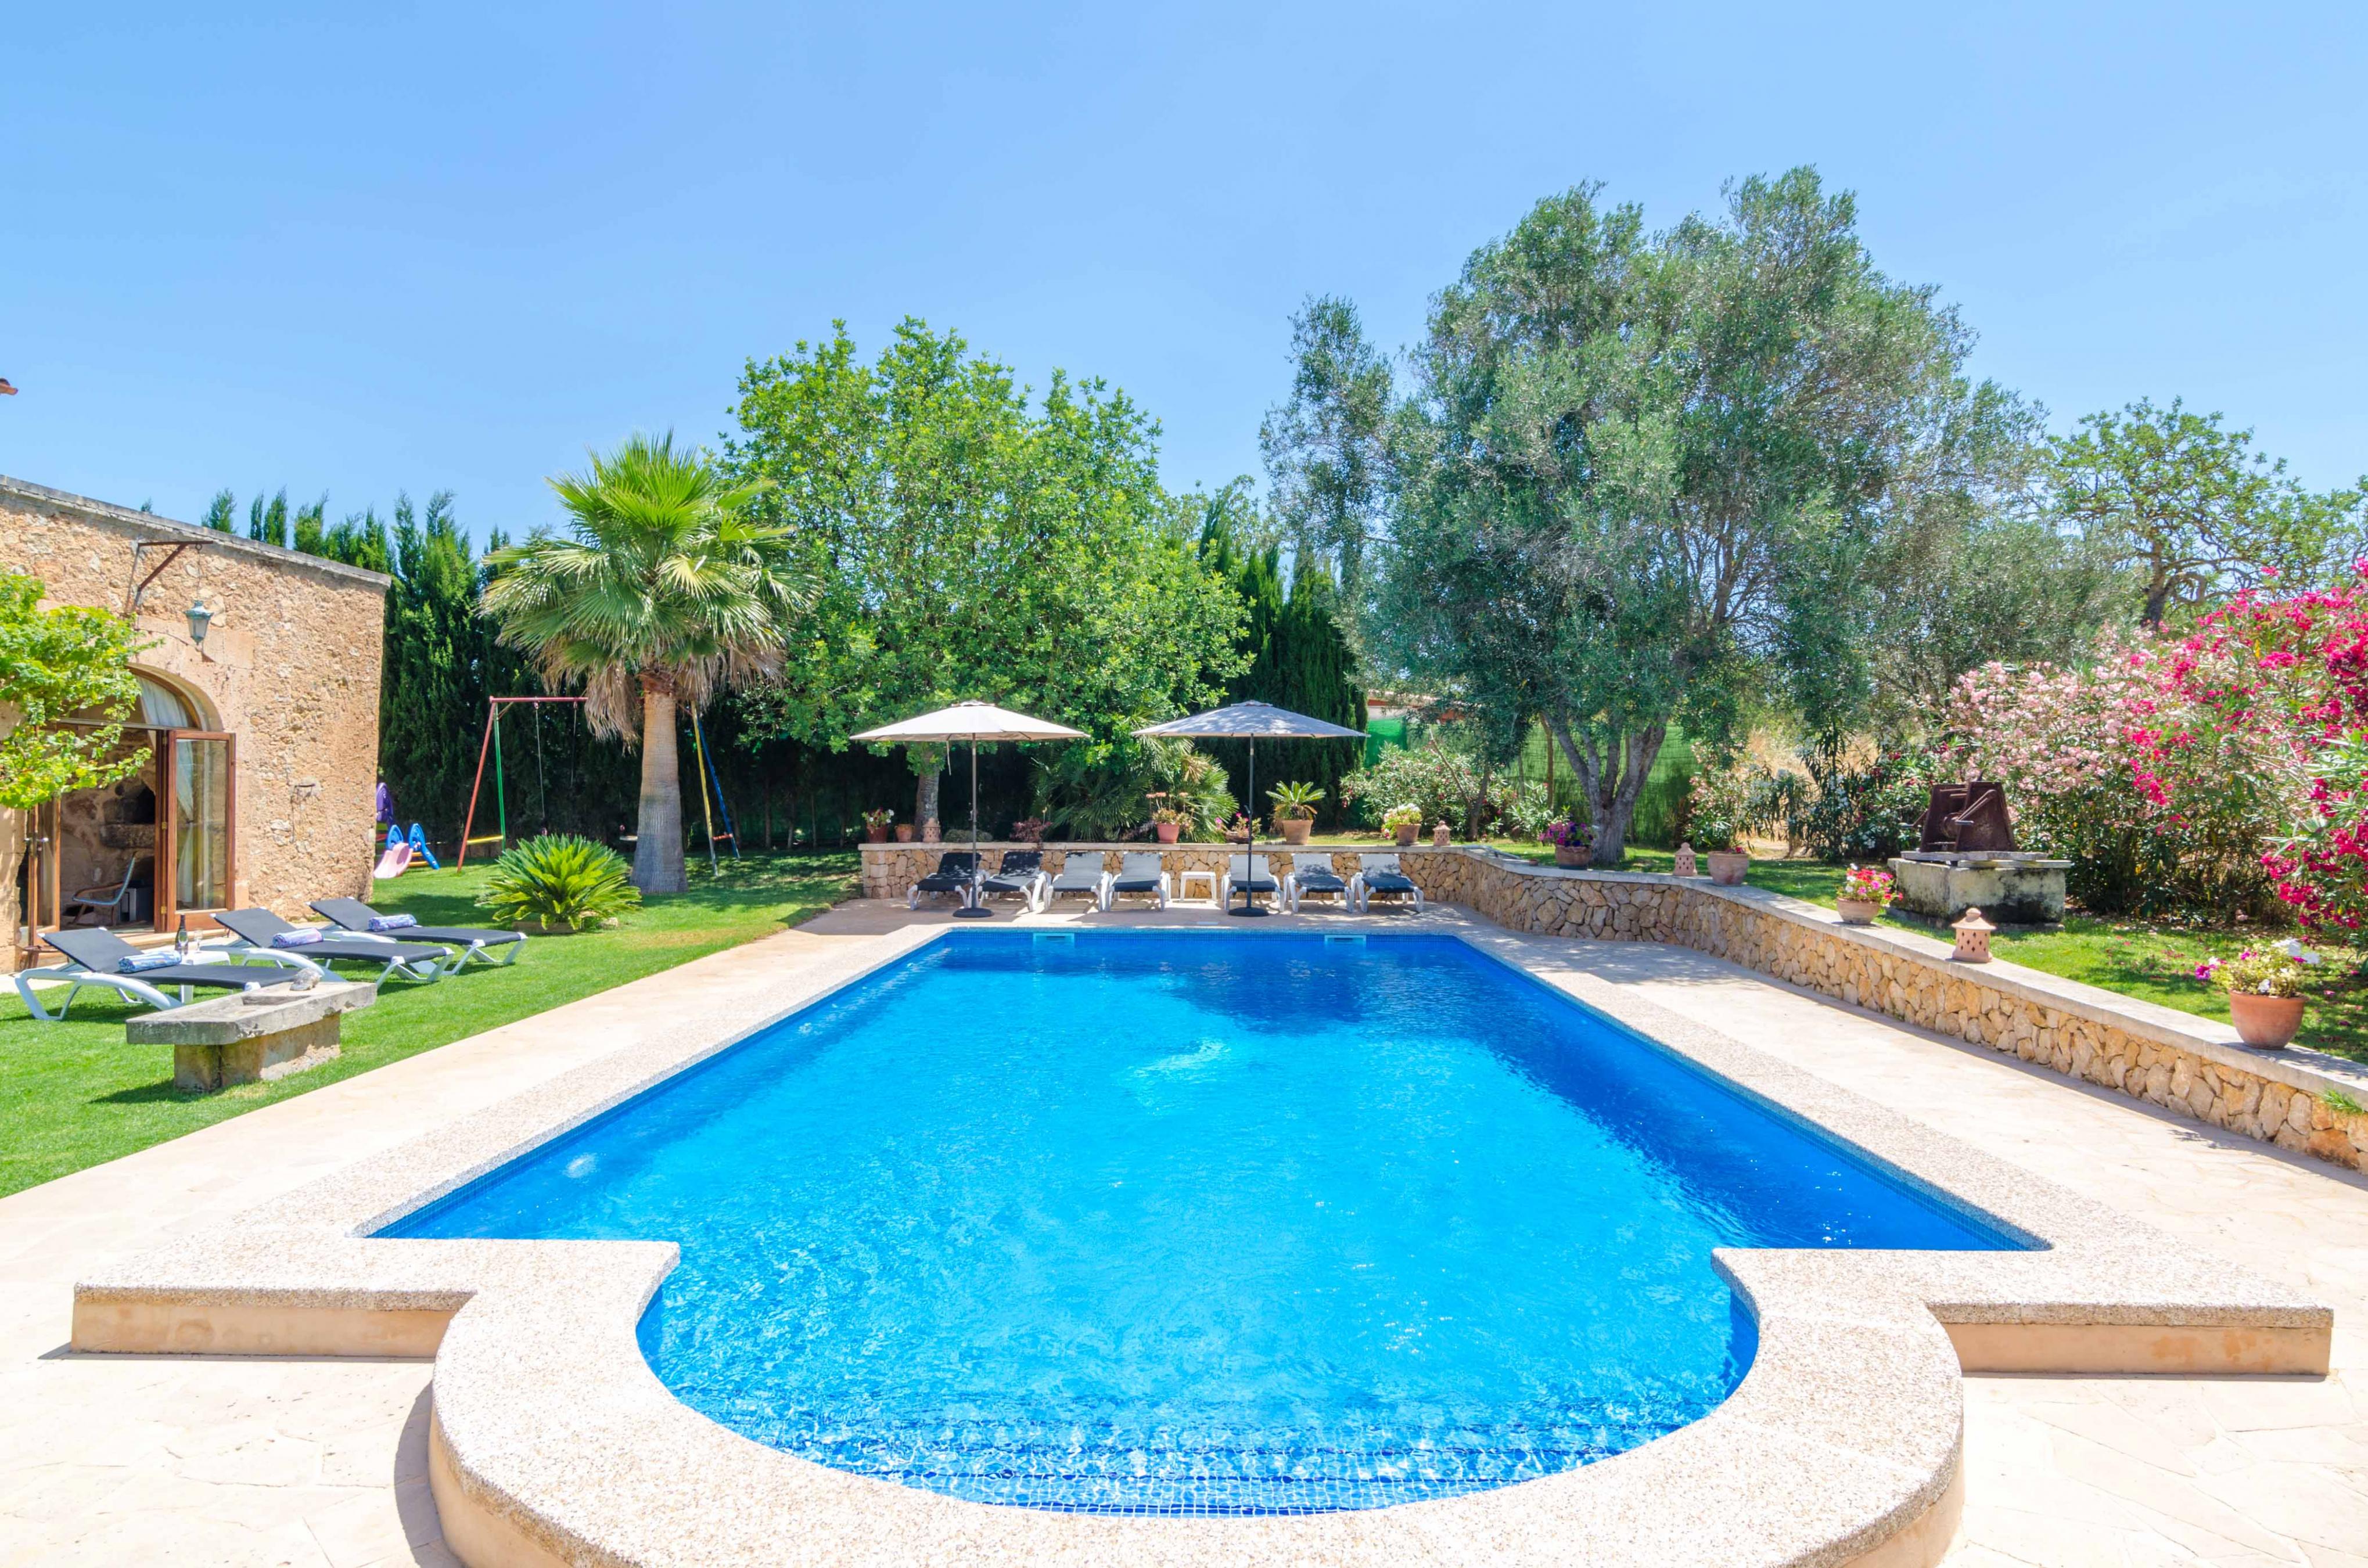 Property Image 2 - FINCA ES PORRASSAR - Villa with private pool in Cas Concos - Felanitx. Free WiFi